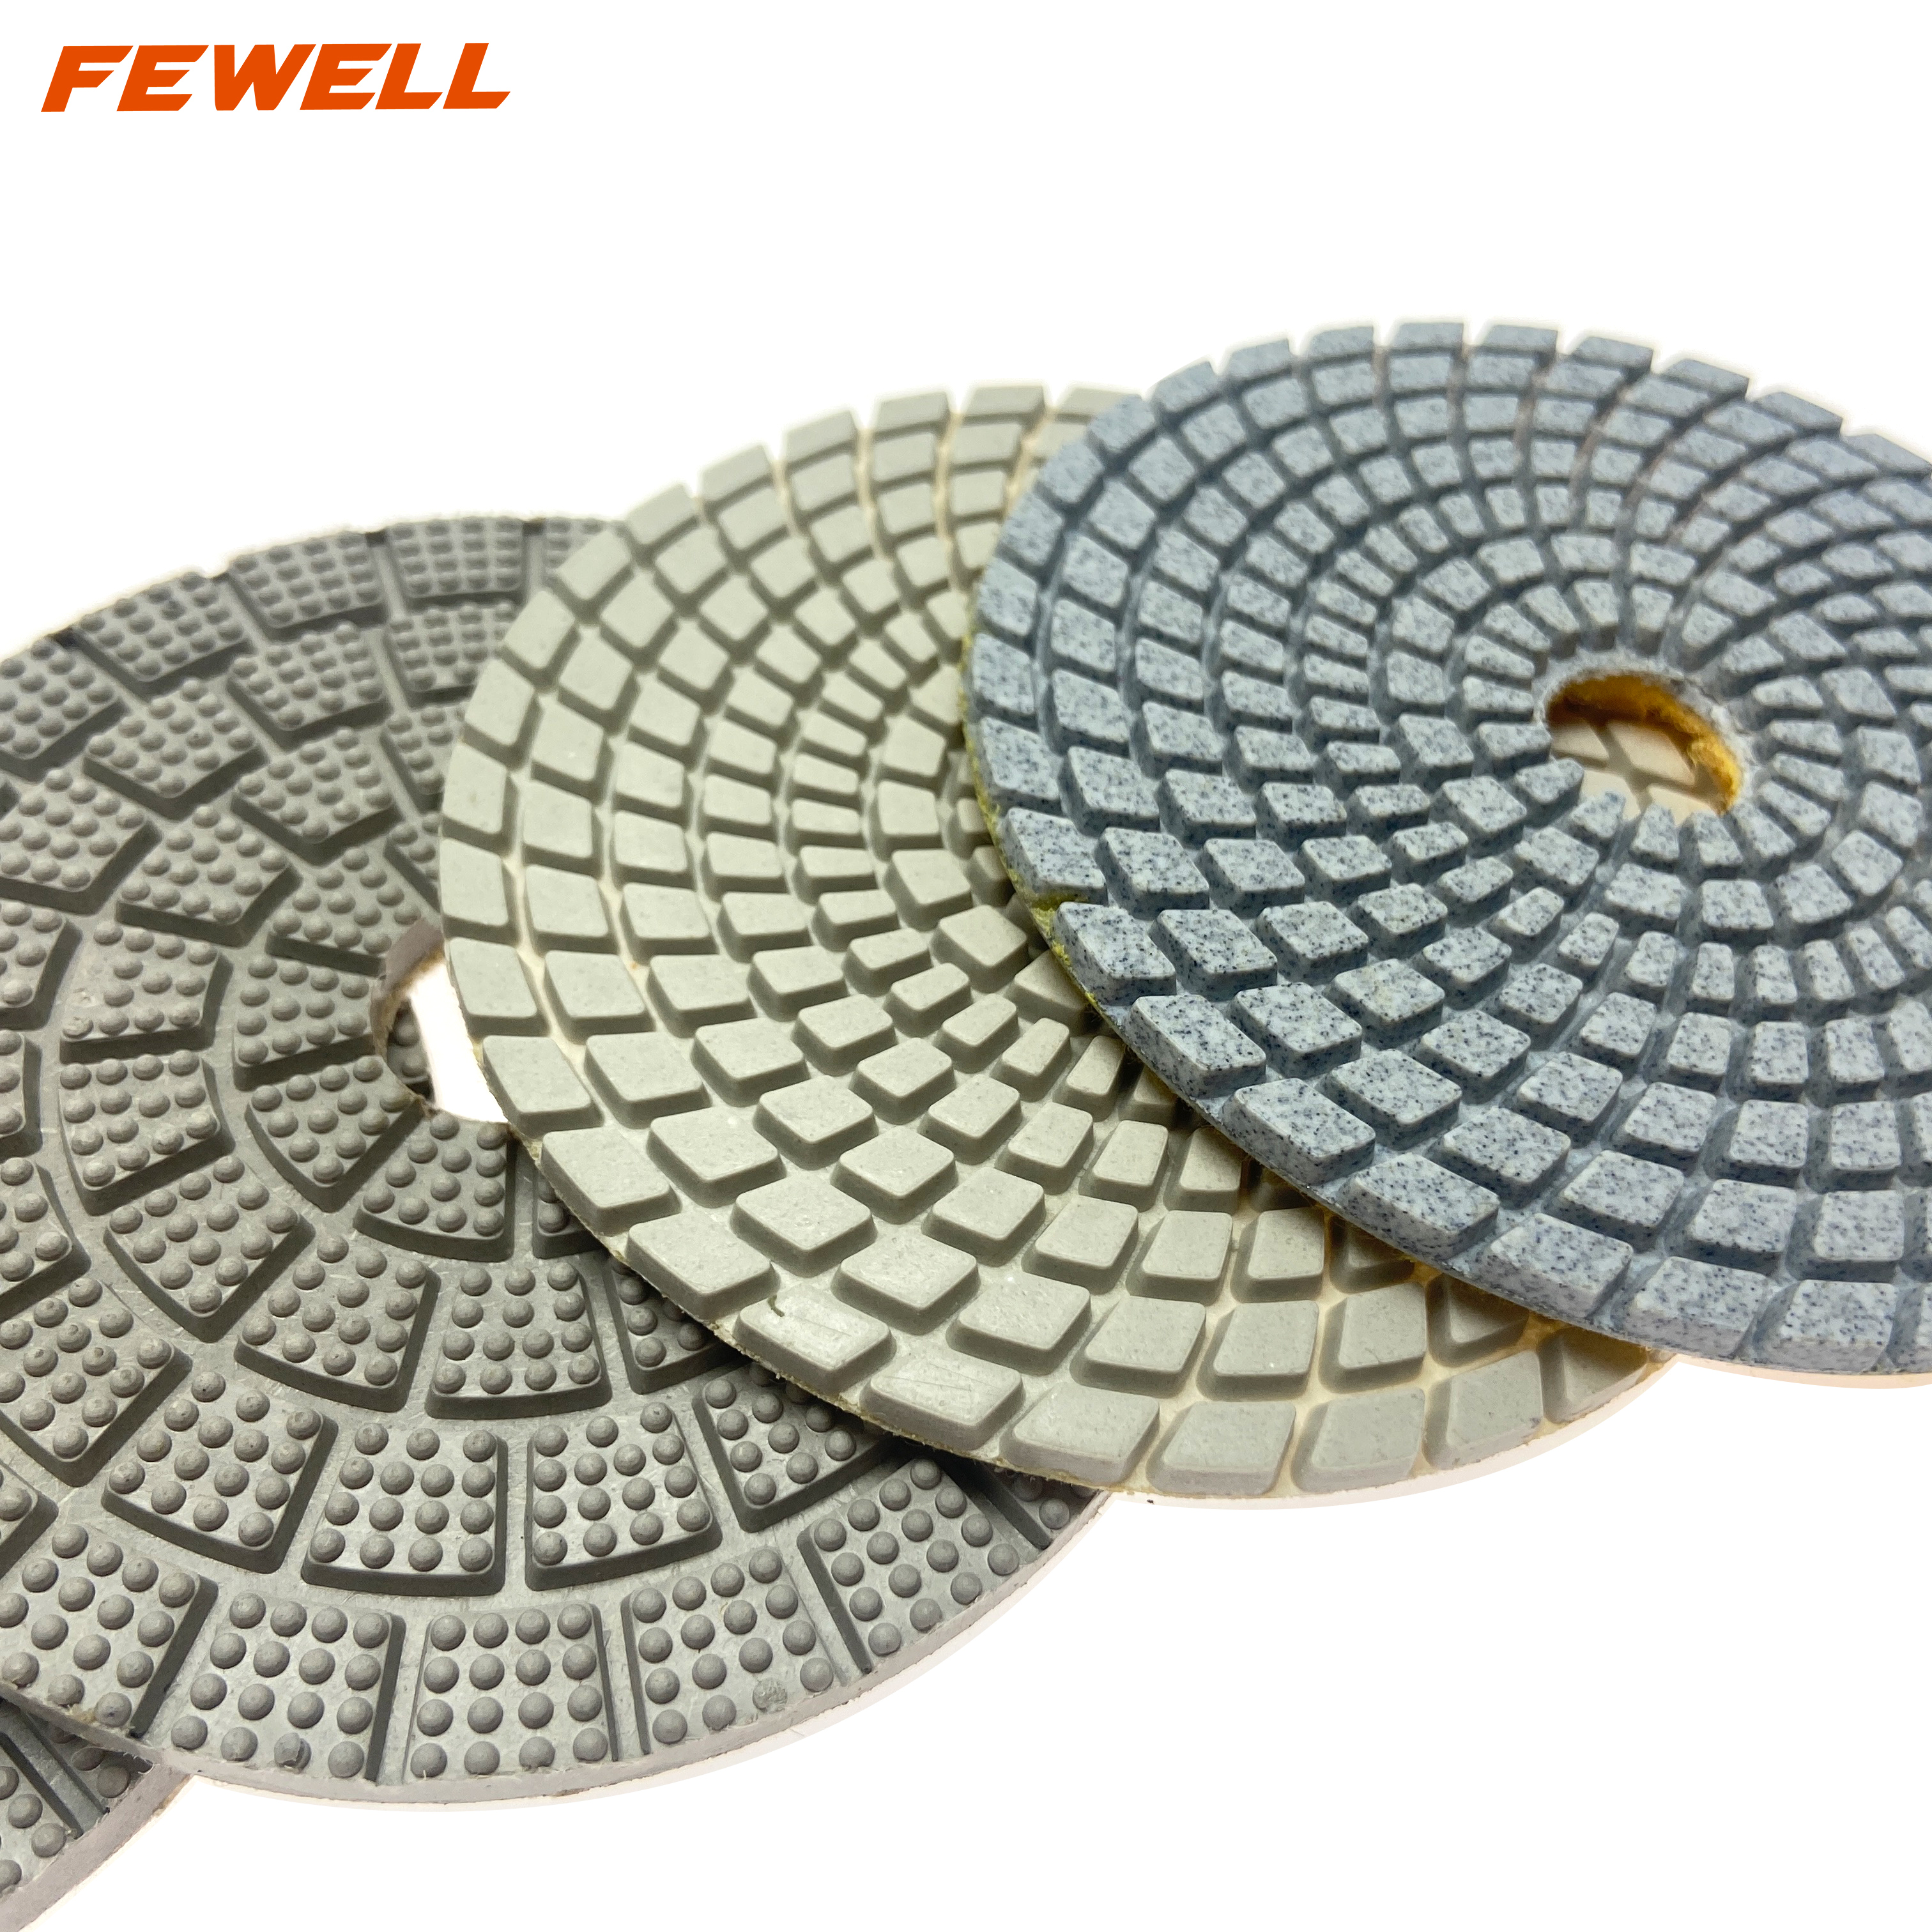 High quality 4inch 100mm Diamond Dry Grinding Abrasive Pads 9 PCS Sets for Polishing Ceramic Tiles Granite Marble Concrete